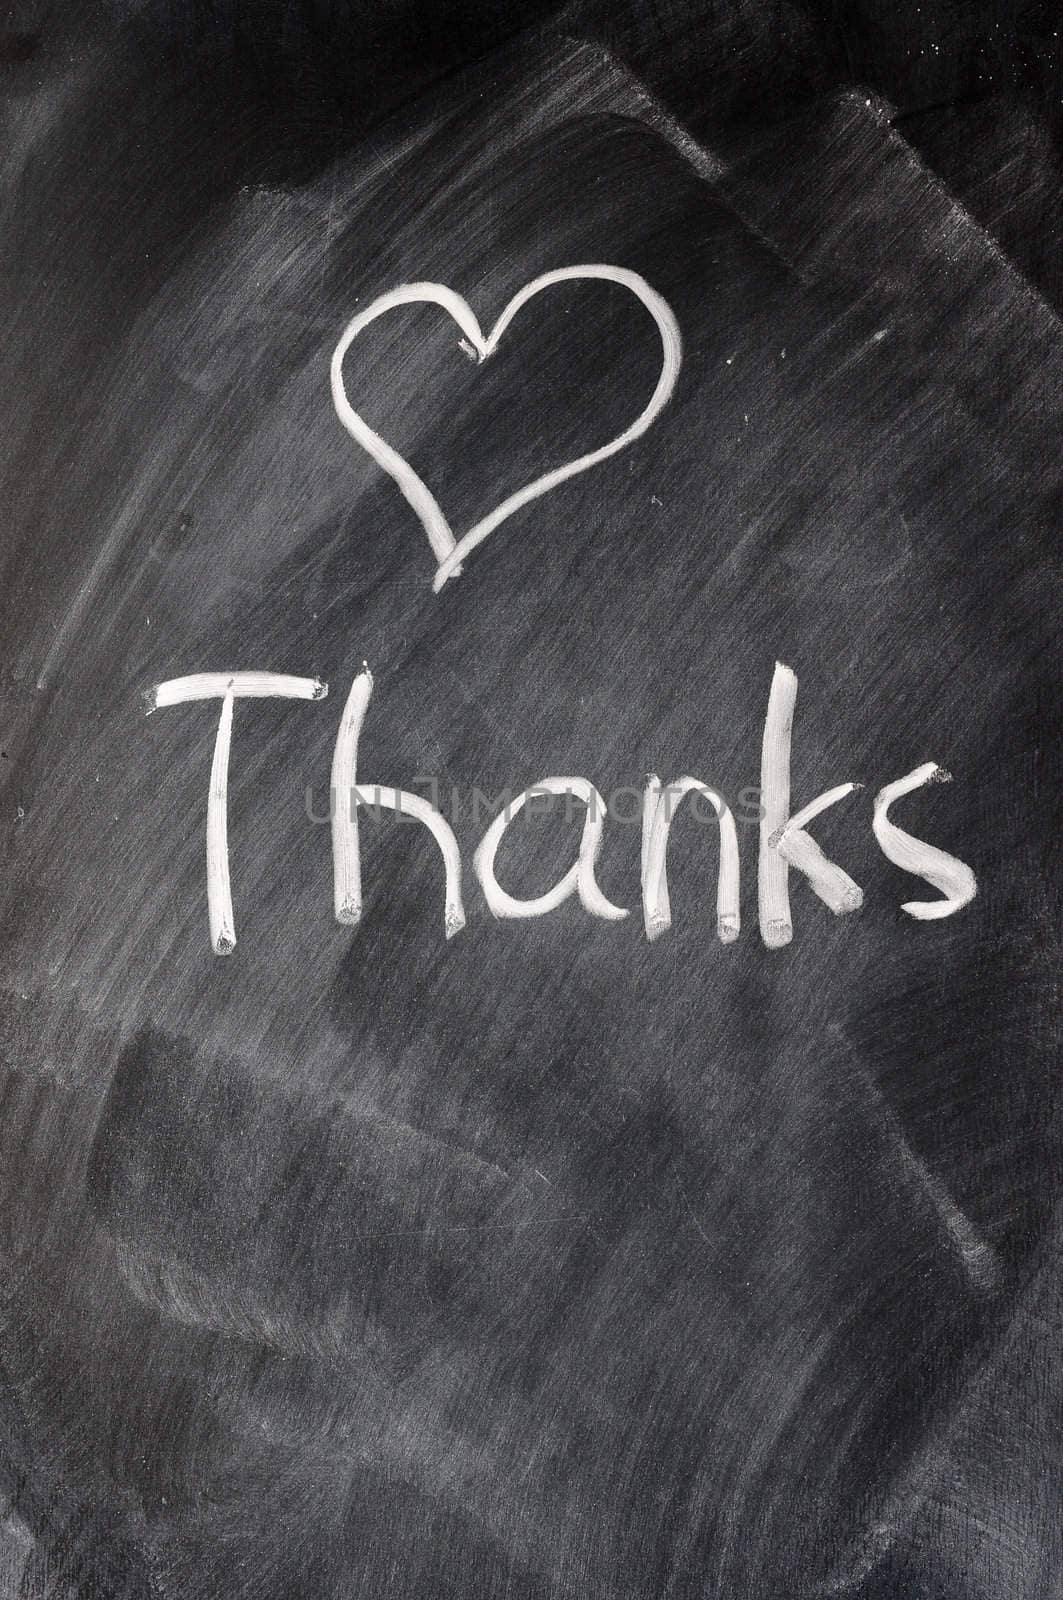 Handwriting of Thank you on a blackboard